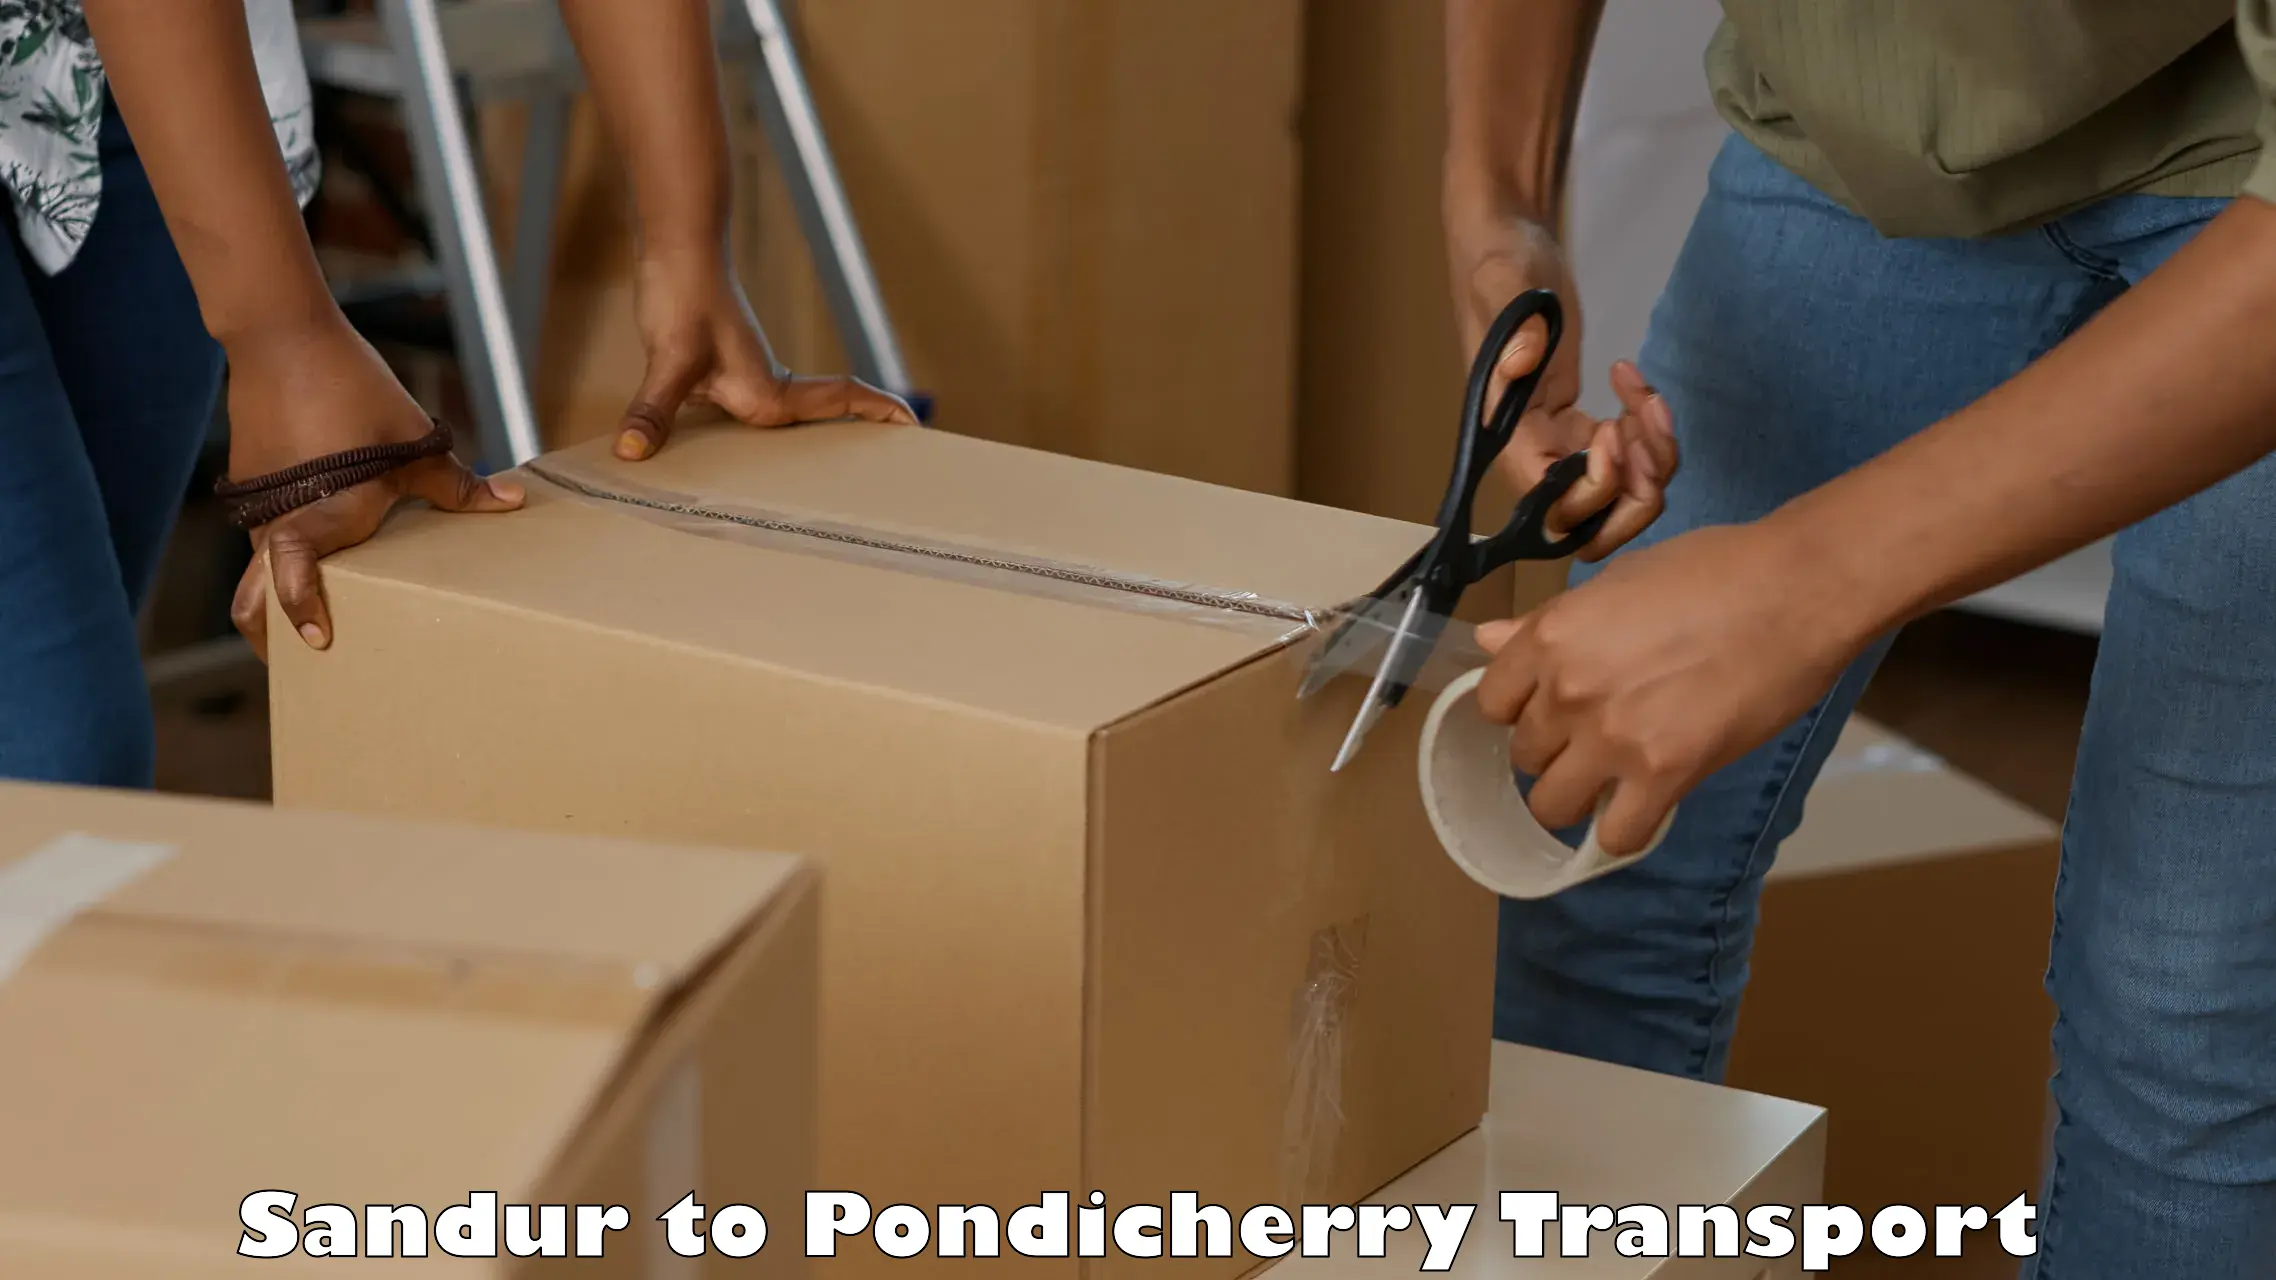 Goods delivery service Sandur to Pondicherry